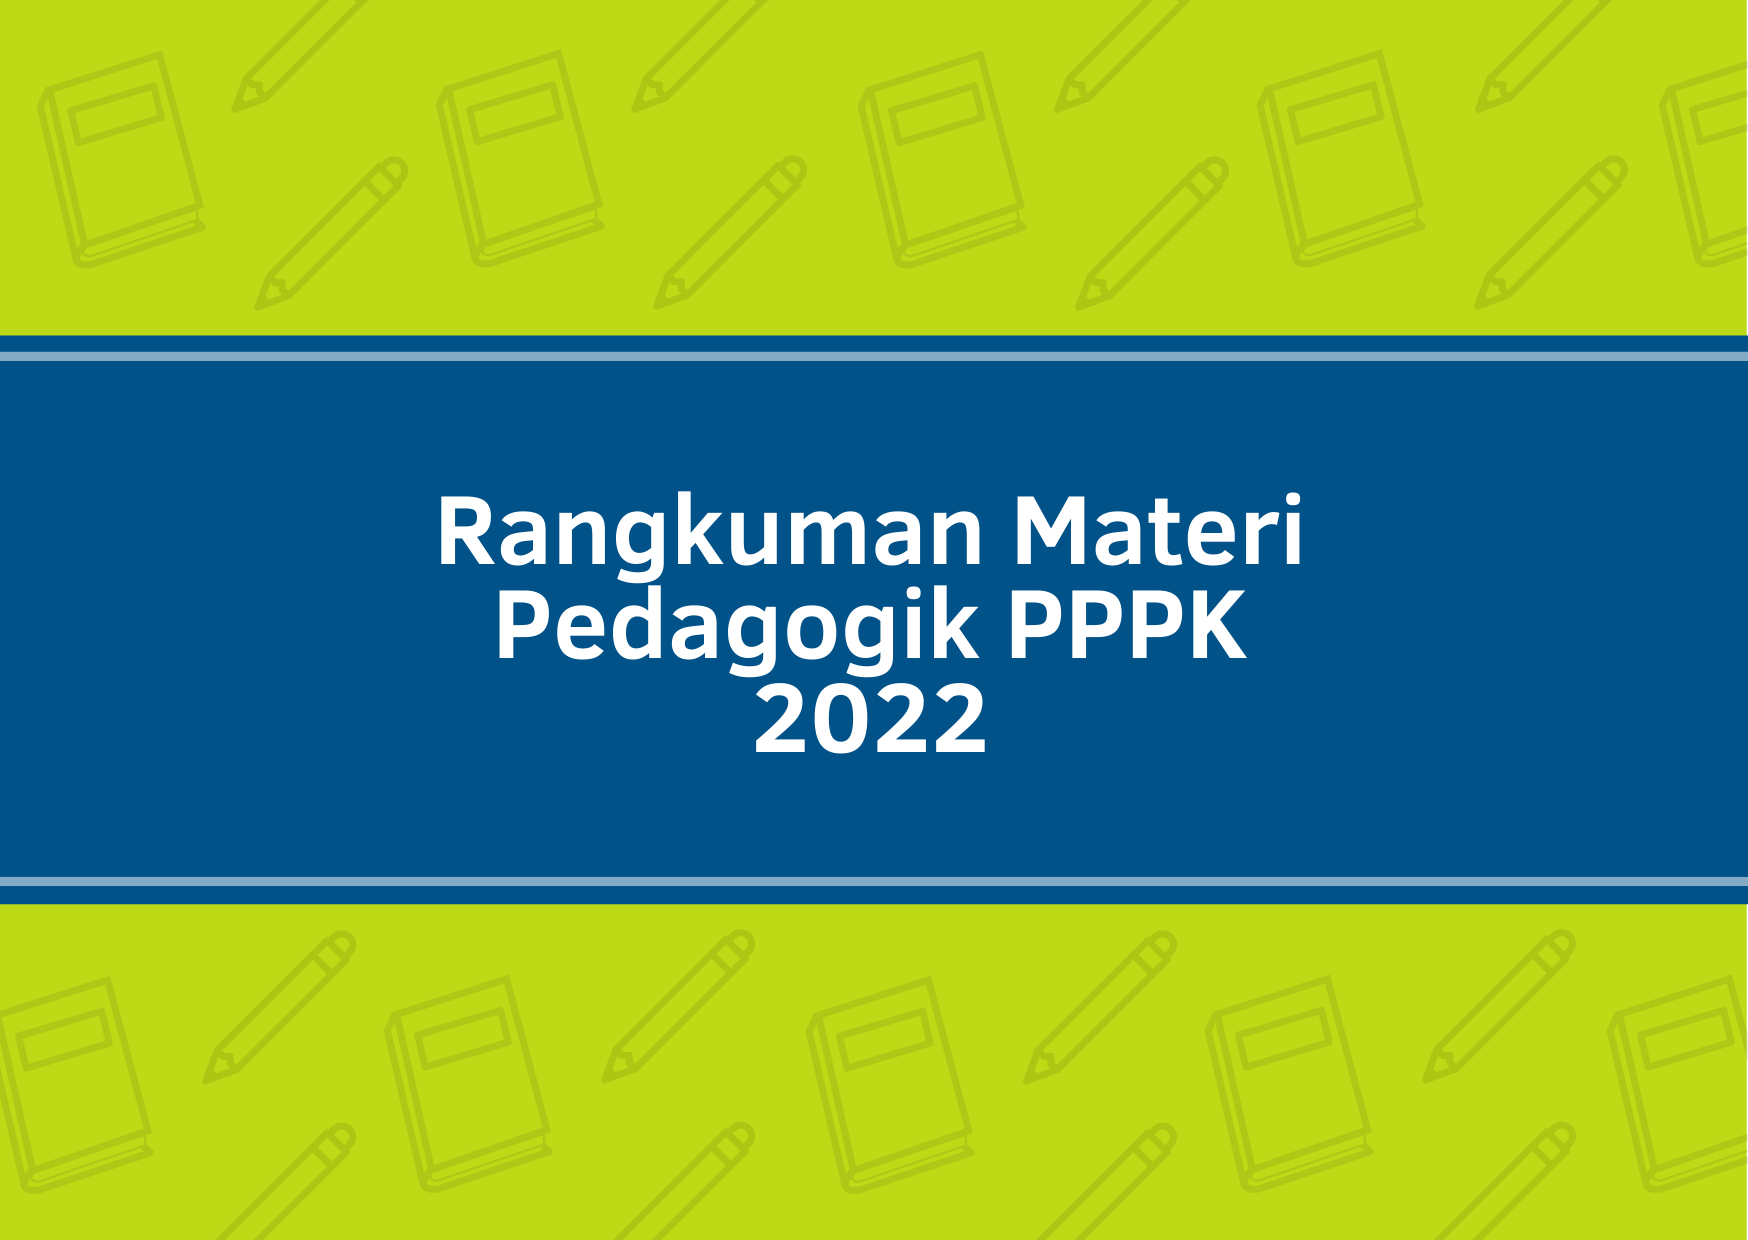 Rangkuman Materi Pedagogik PPPK 2022